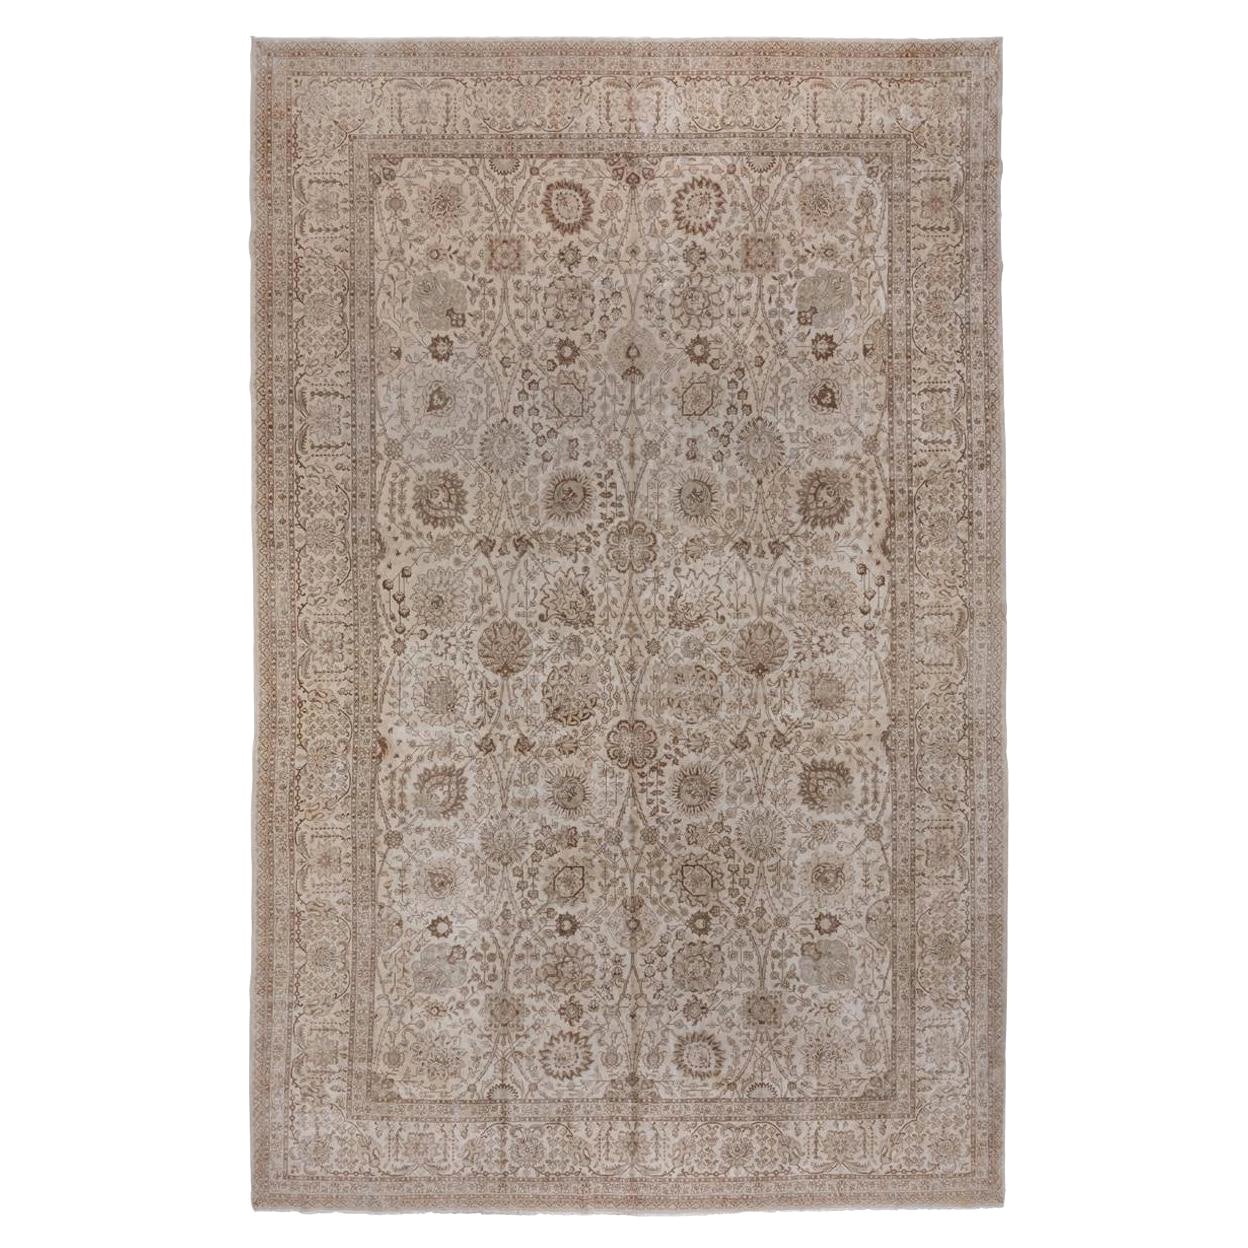 Antique Tabriz Carpet, Ivory Field